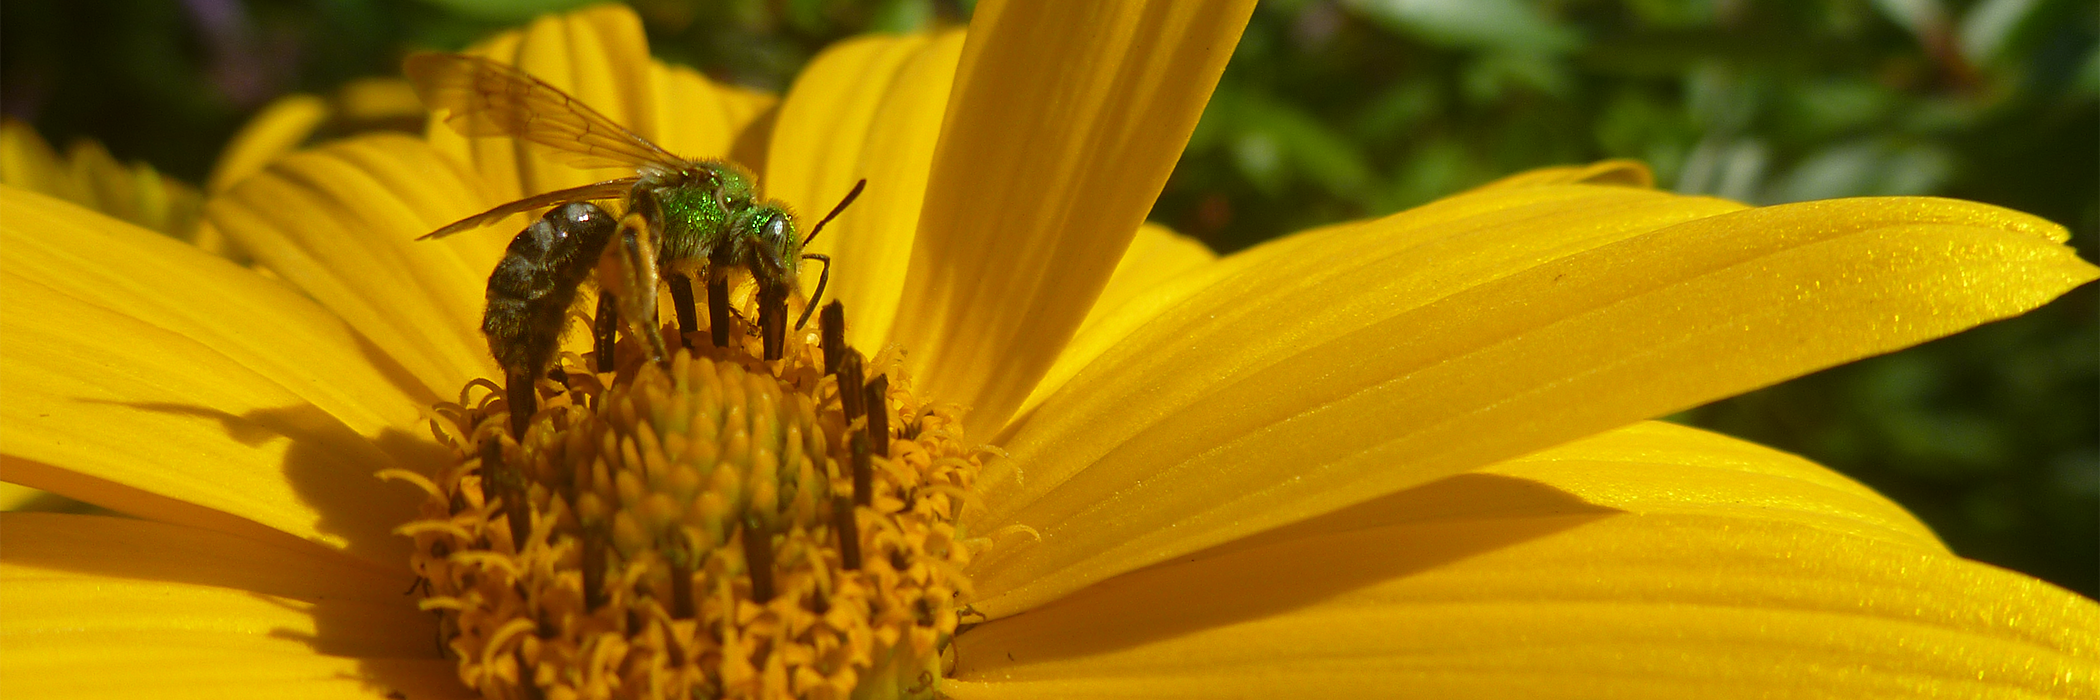 Macro photo of green metallic sweat bee perched on a yellow flower